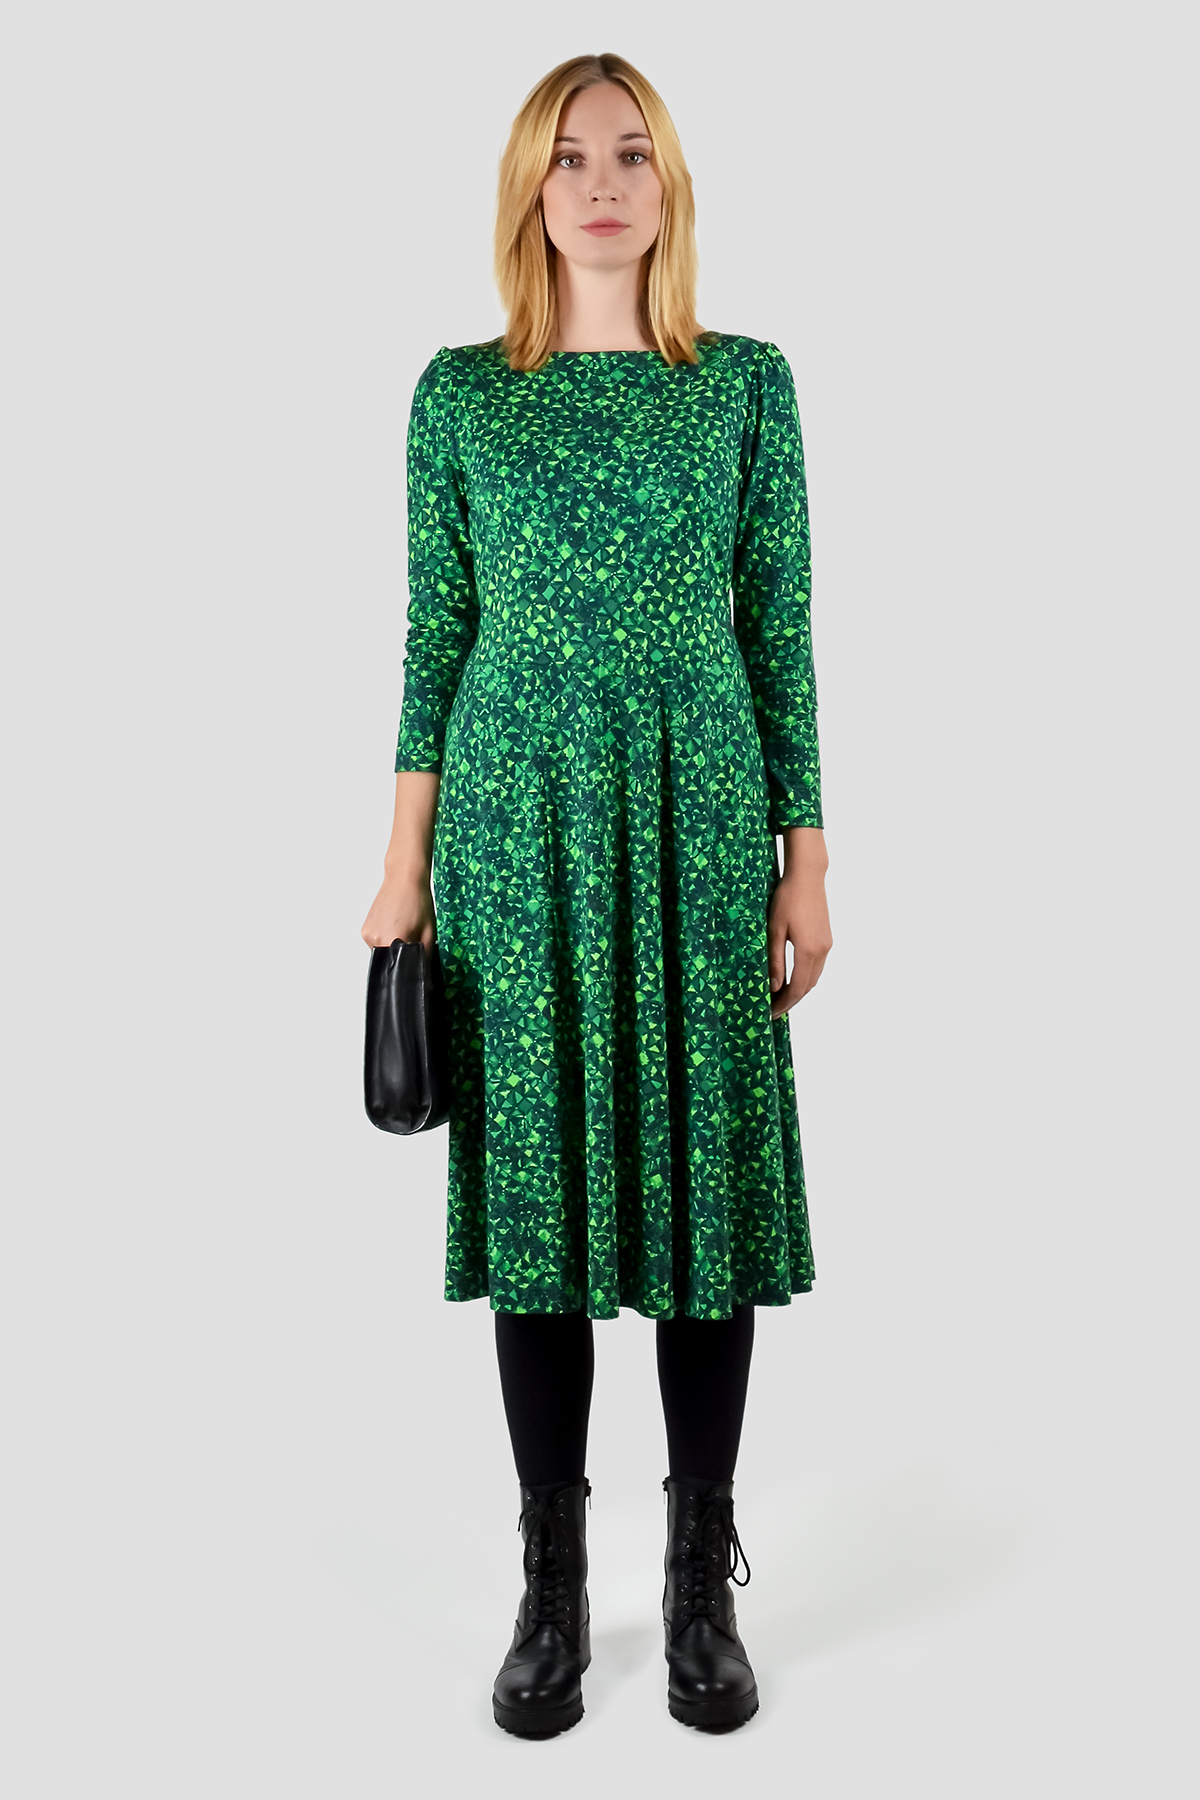 Smaragd-Kleid Gruen Weiter Rock Midikleid Damen